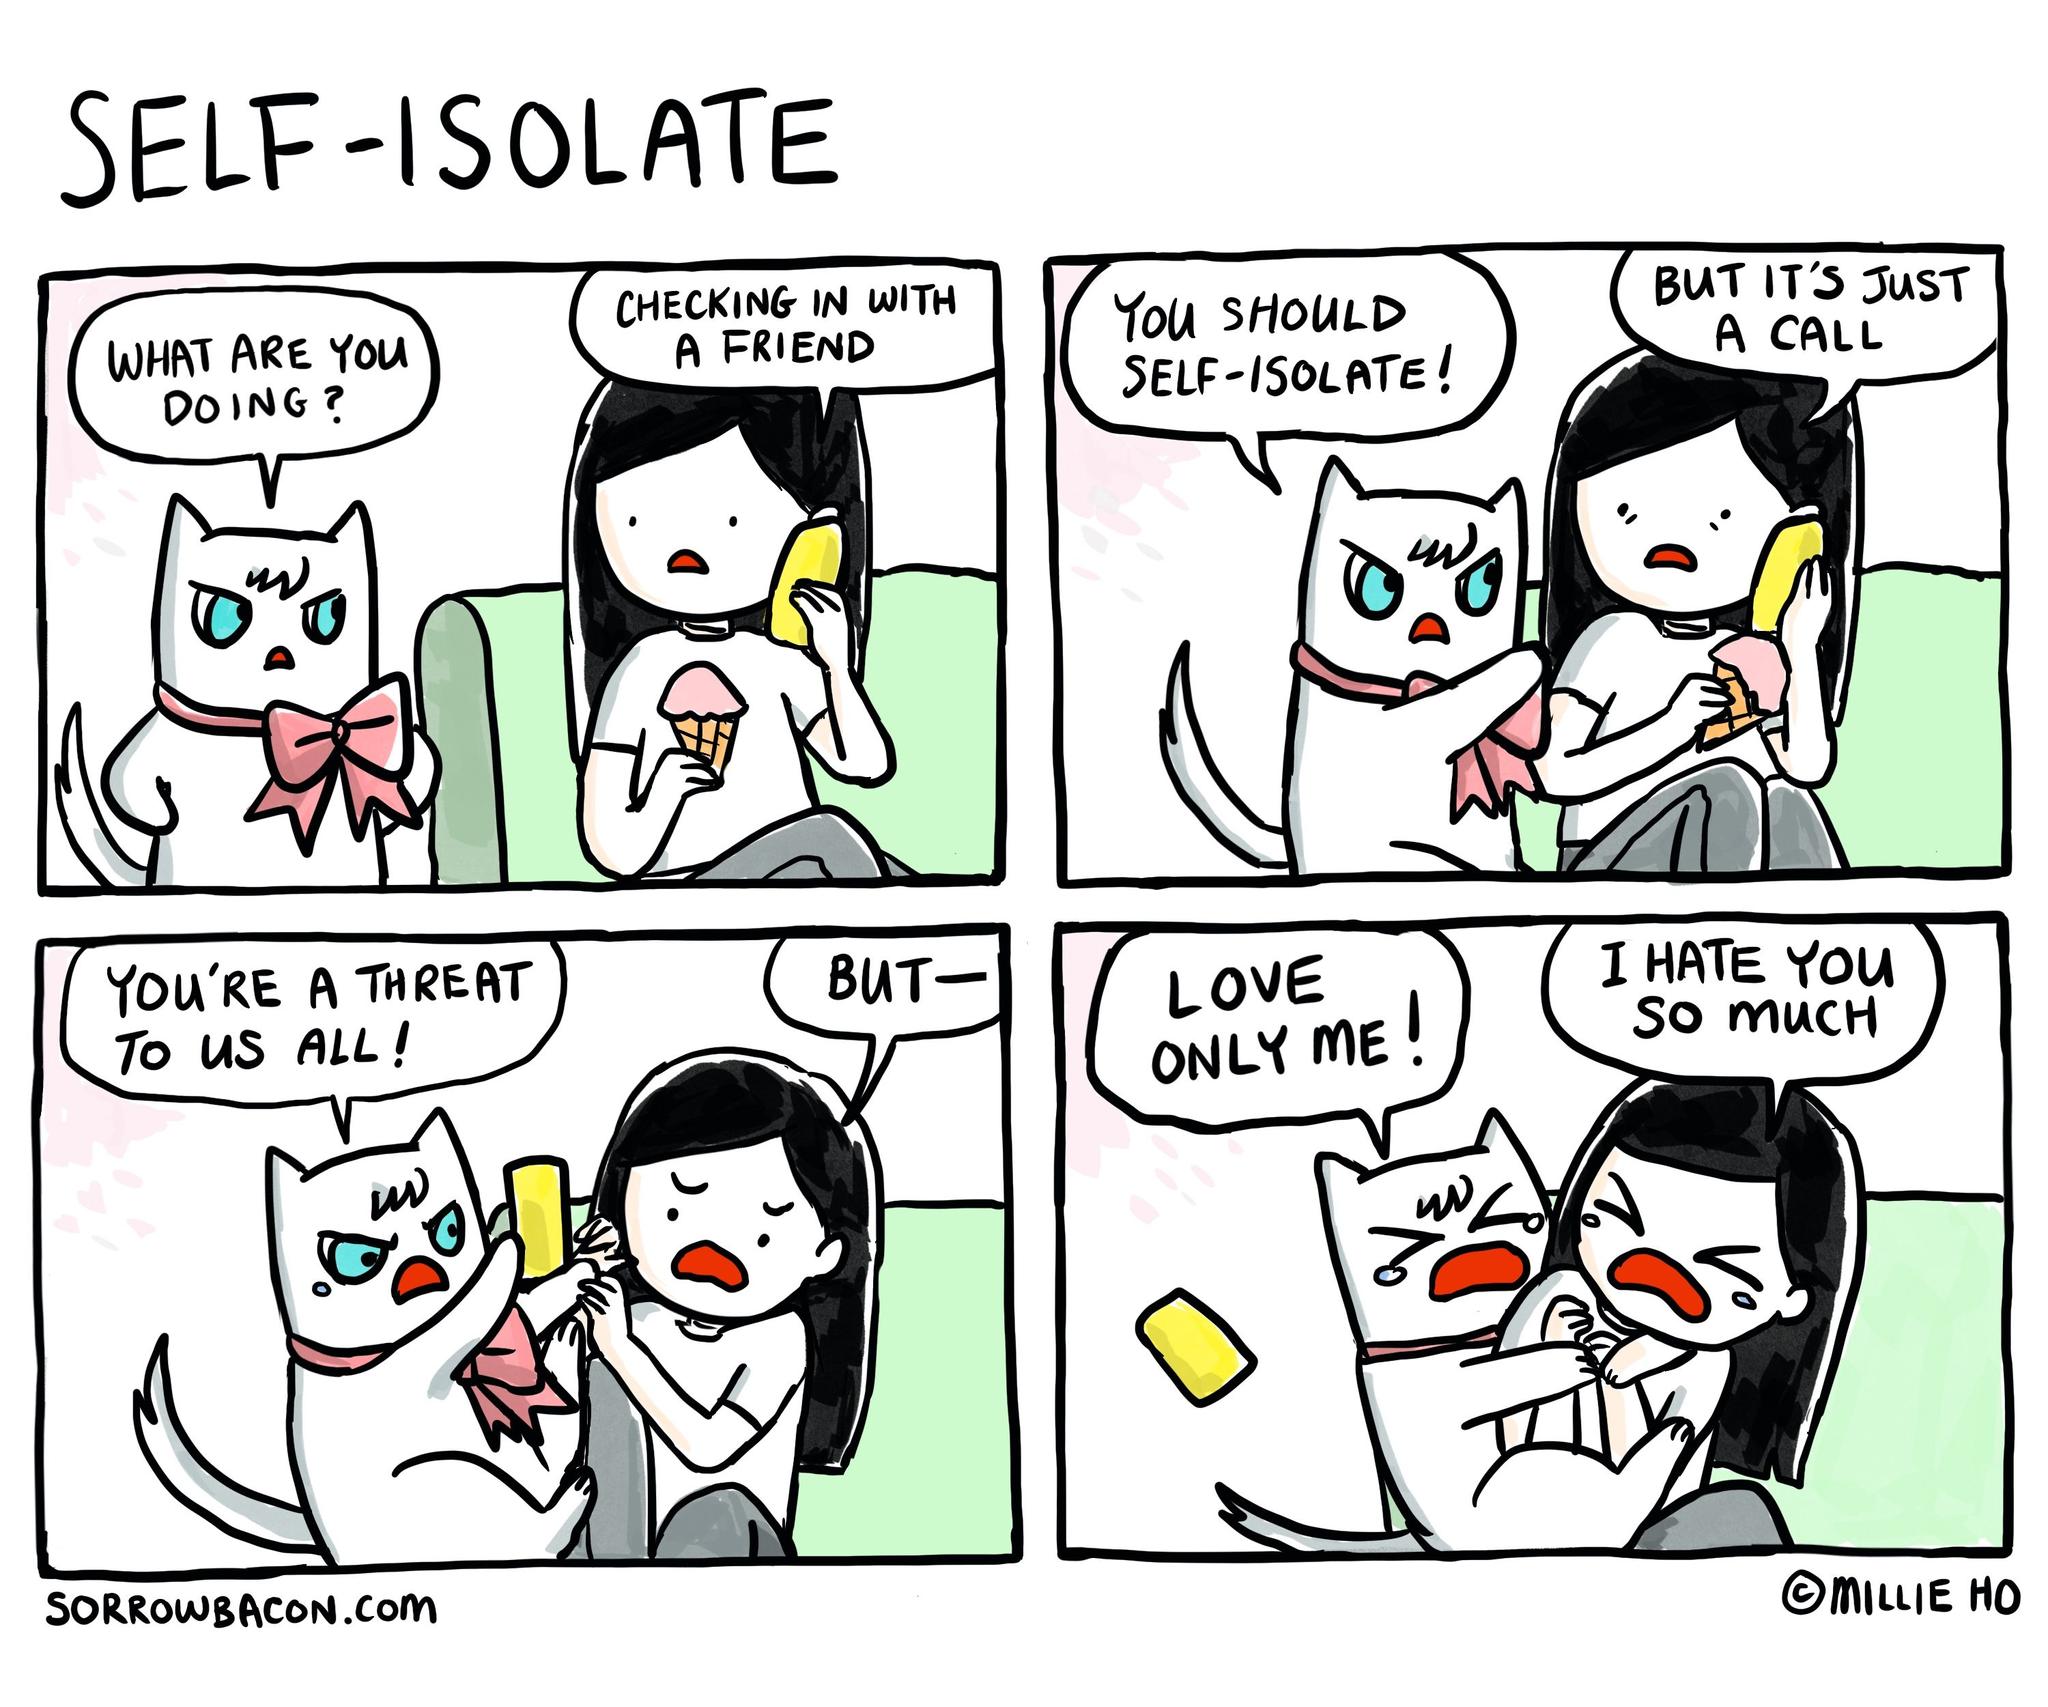 Self-Isolate sorrowbacon comic